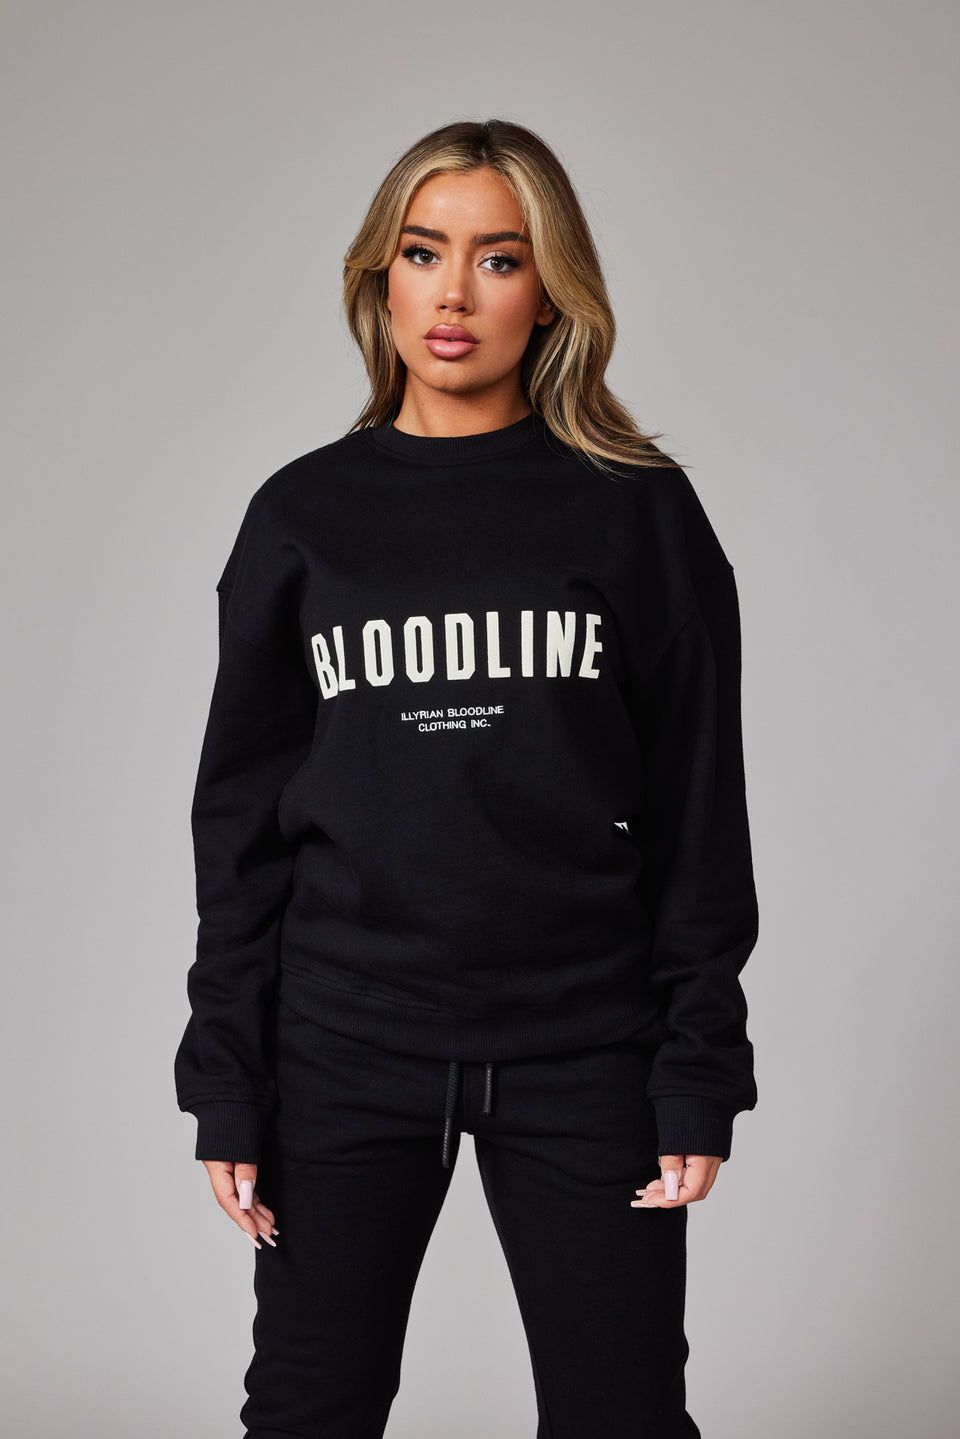 The Bloodline Sweater - Black